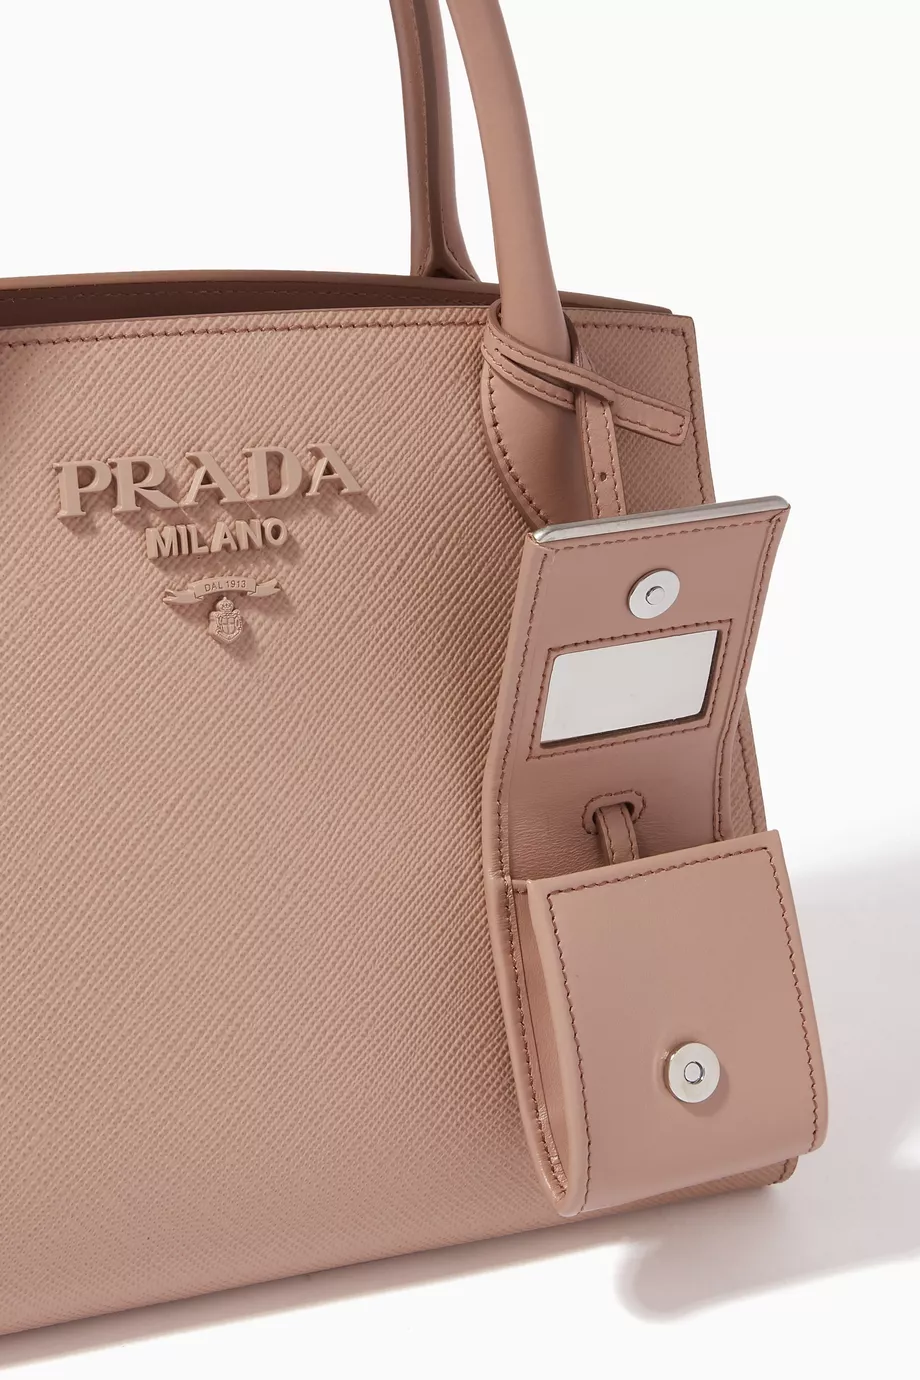 PRADA Borsa A Mano Monochrome Small Saffiano Leather Cameo Pink